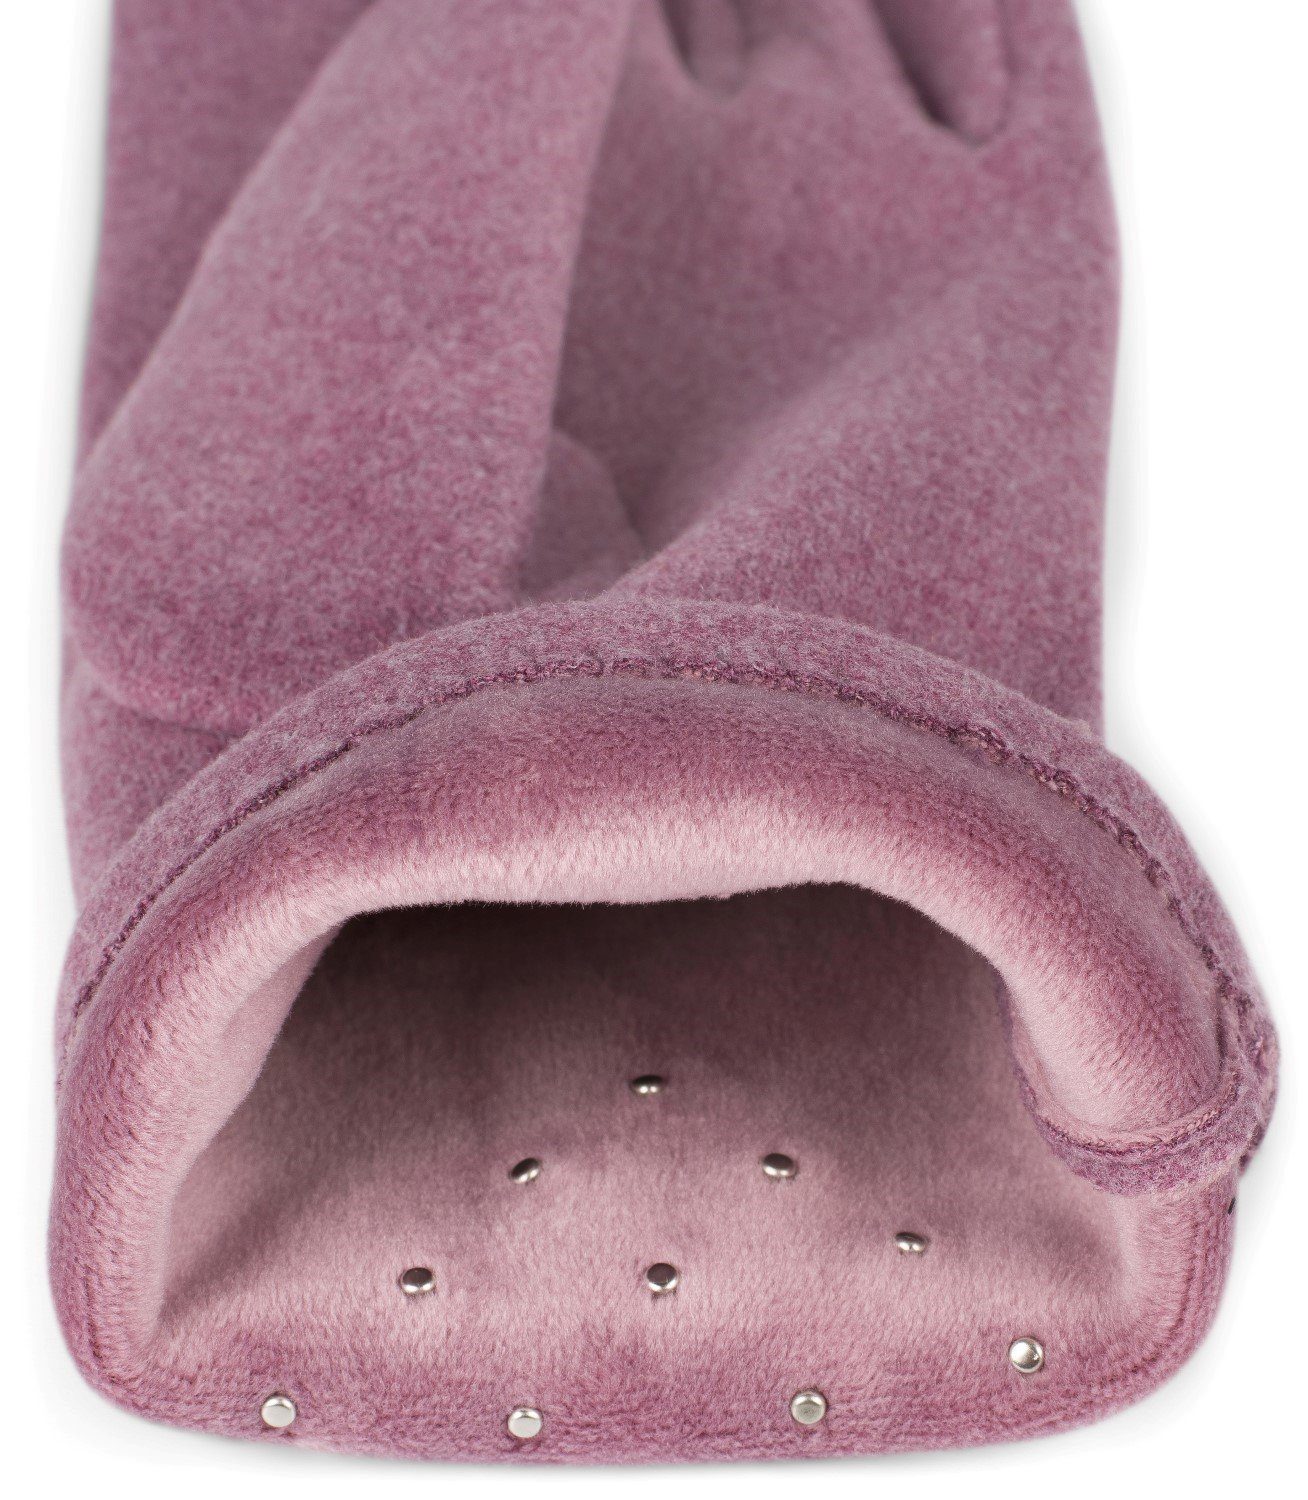 styleBREAKER Fleecehandschuhe Touchscreen Handschuhe mit Perlen Mauve und Strass